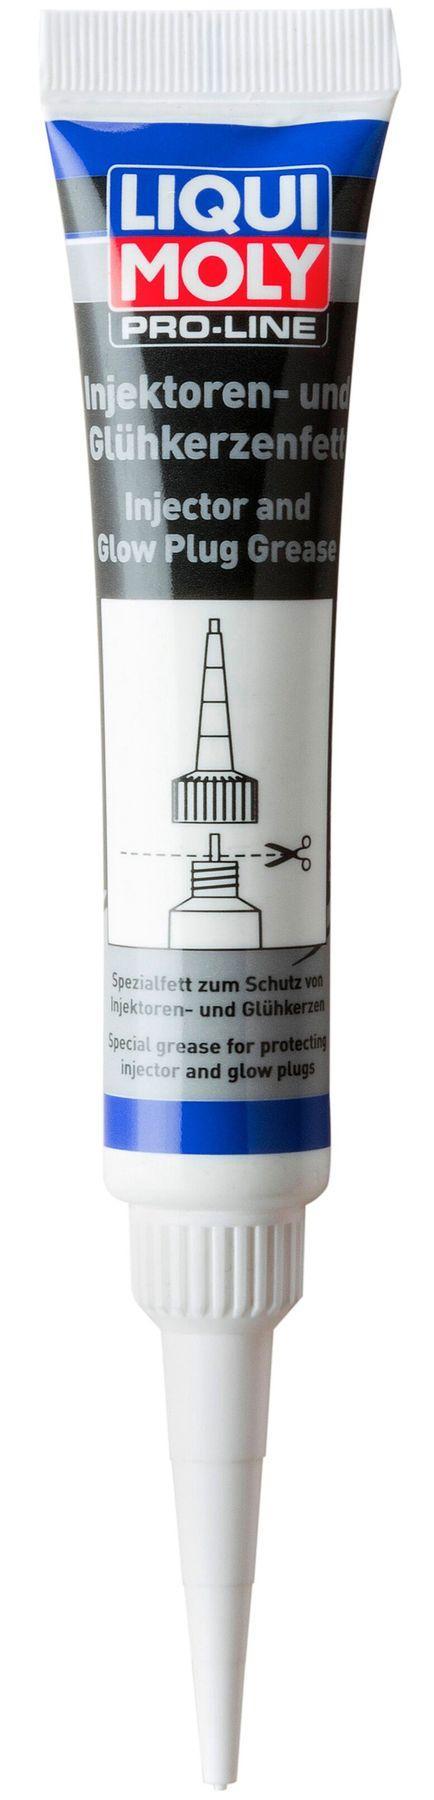 Смазка для монтажа форсунок и свечей накала Pro-Line Injektoren- und Gluhkerzenfett, 20мл (3381)